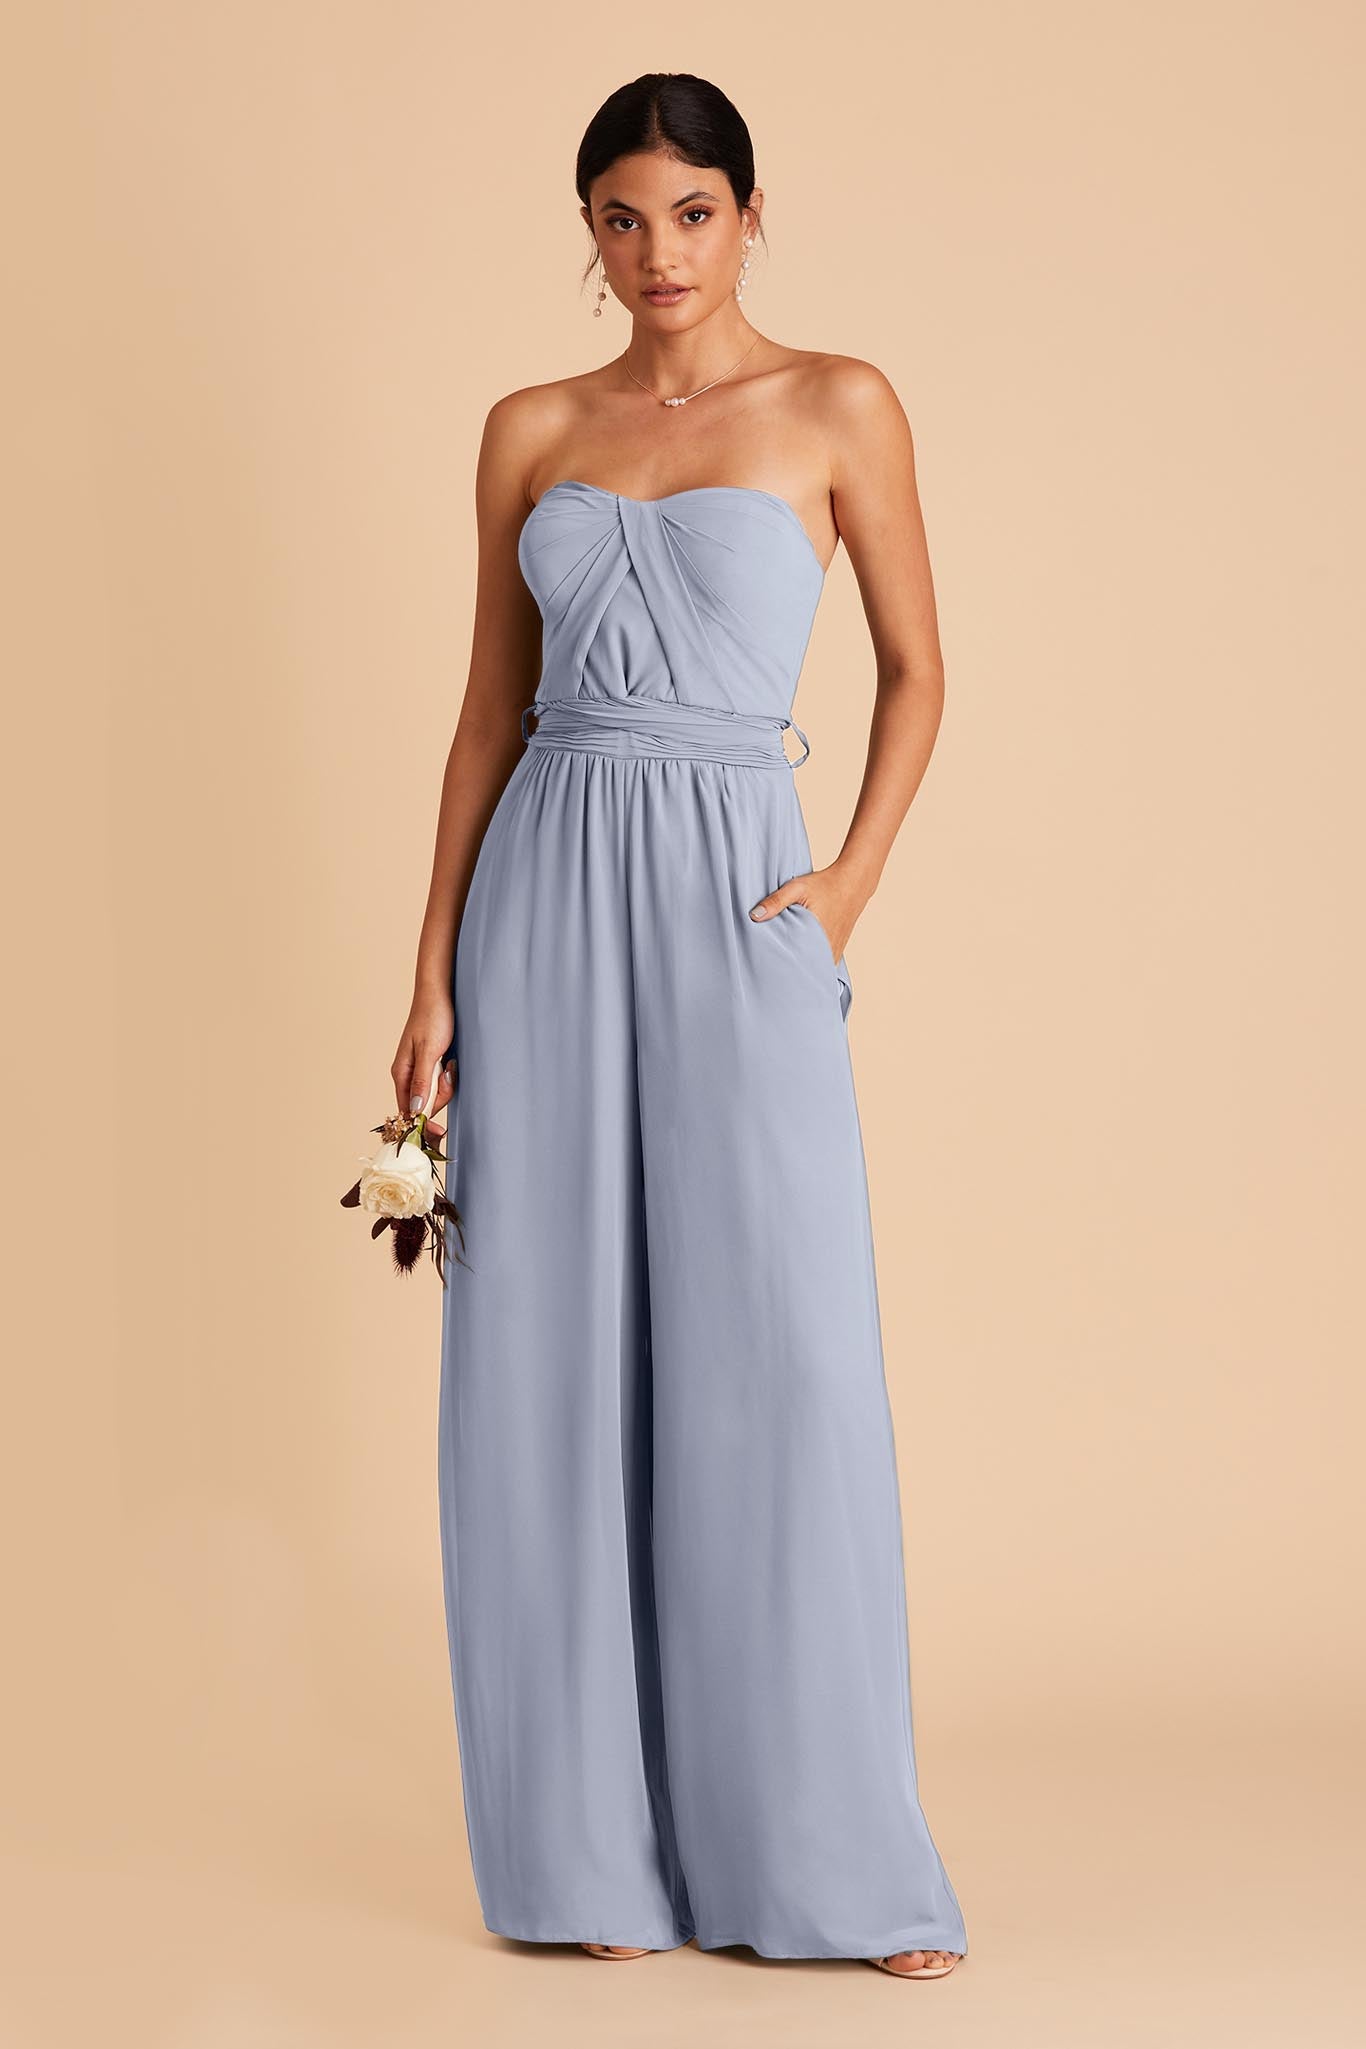 Dusty Blue Bridesmaid Dress Infinity Dress Periwinkle Convertible